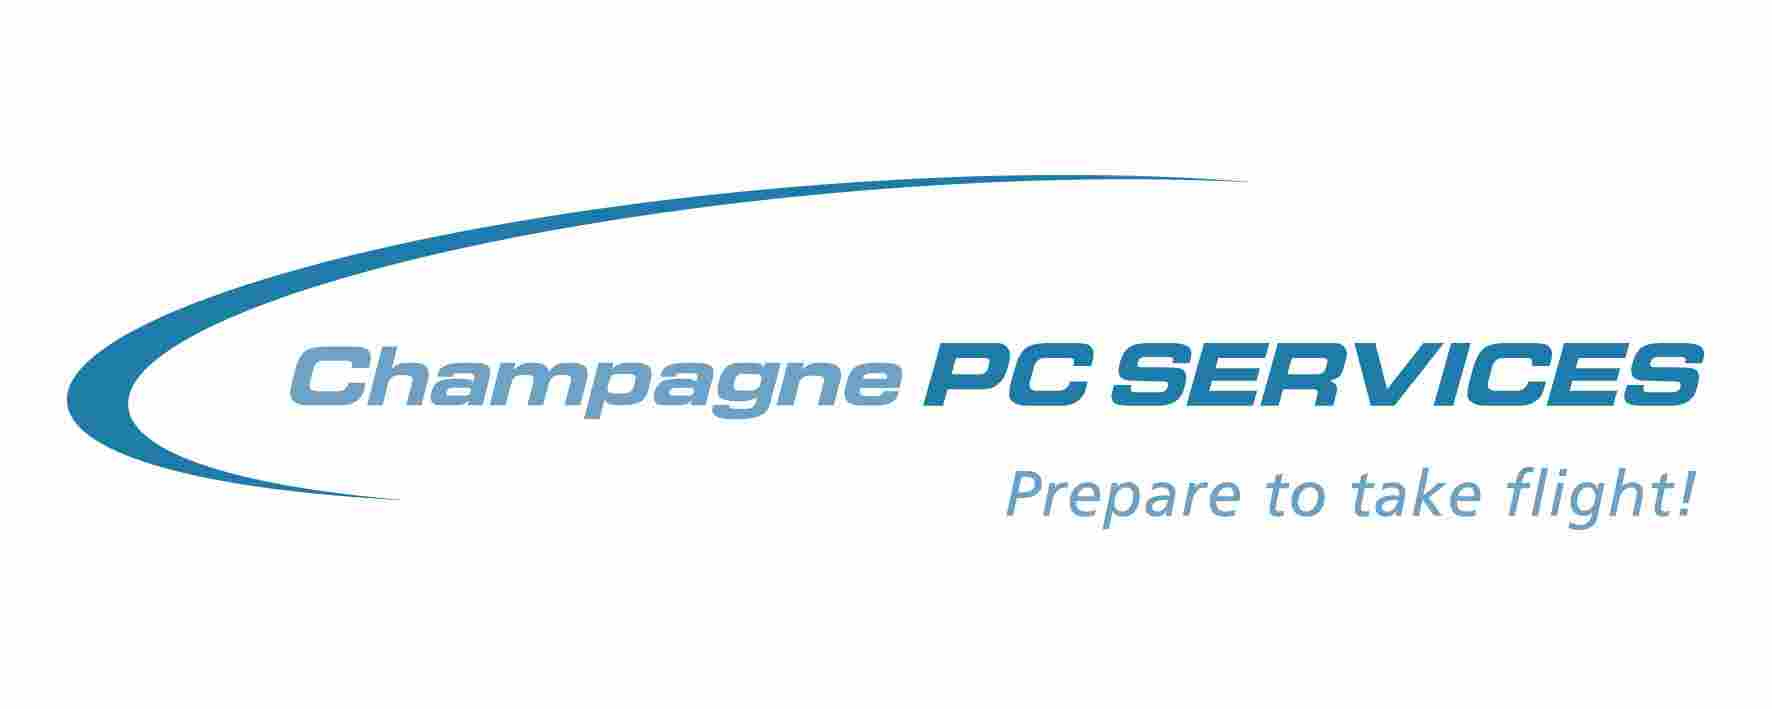 Champagne PC Services